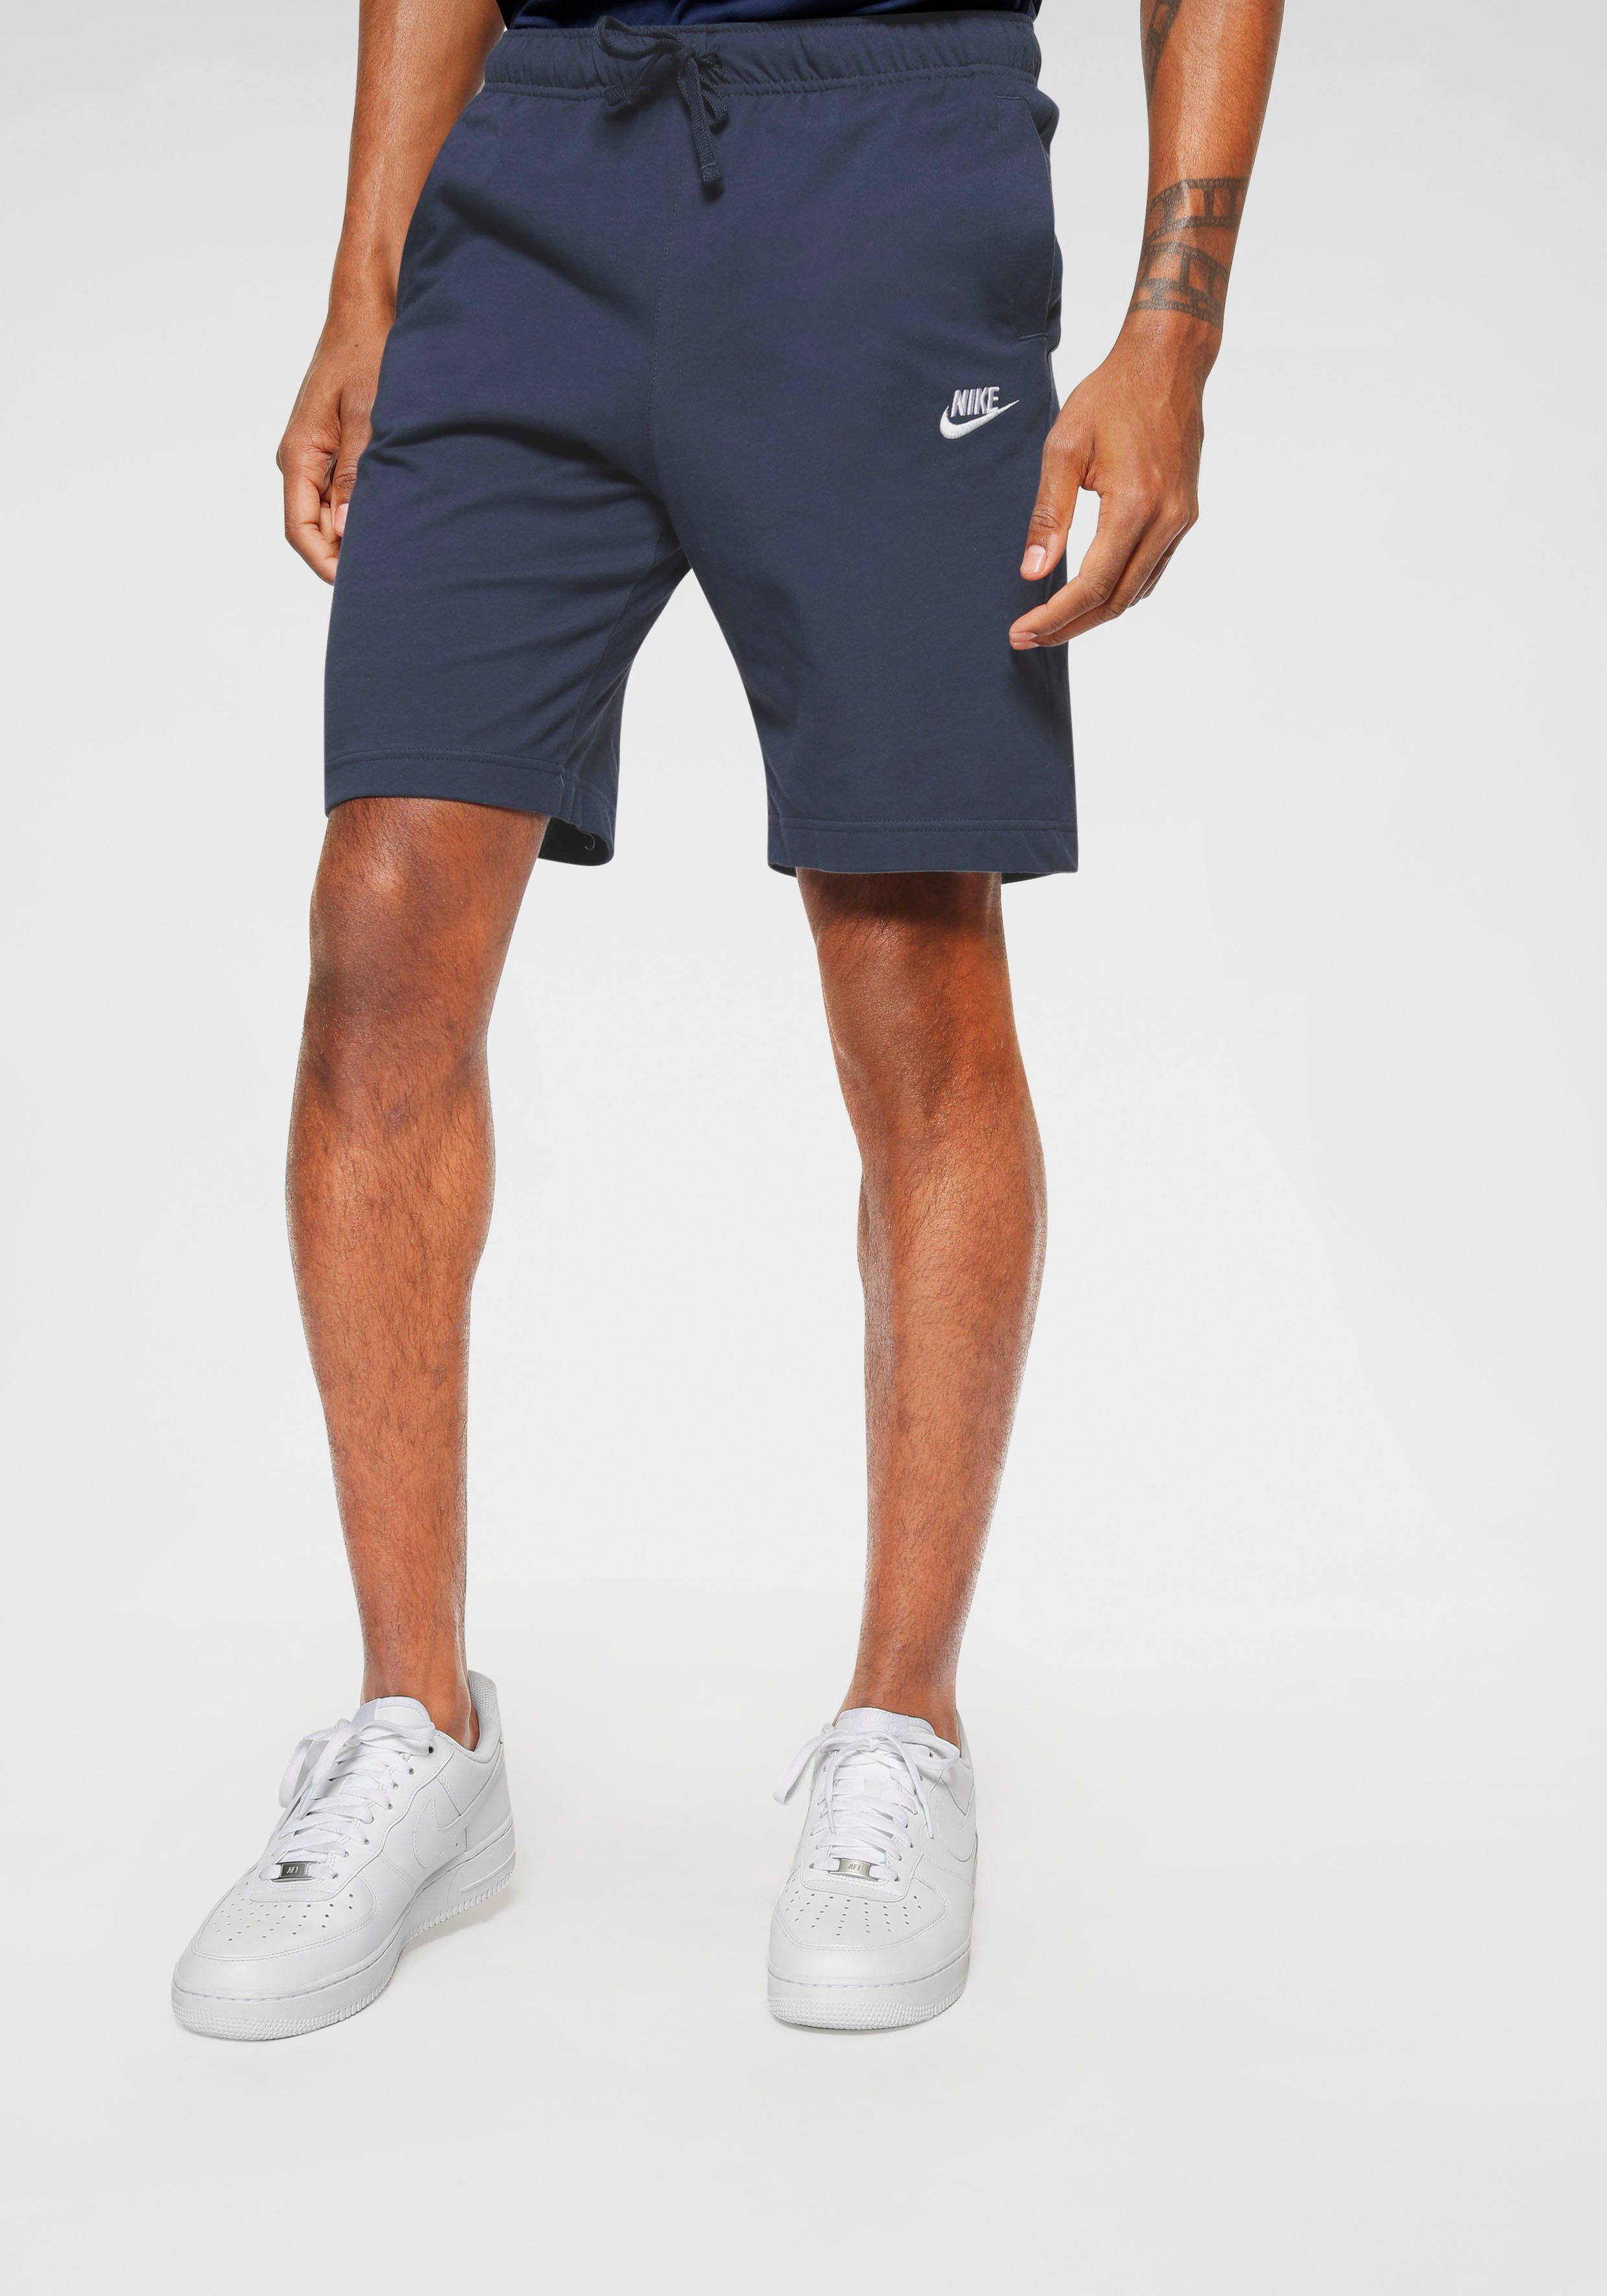 Nike Sportswear Shorts Club Men's Shorts marine